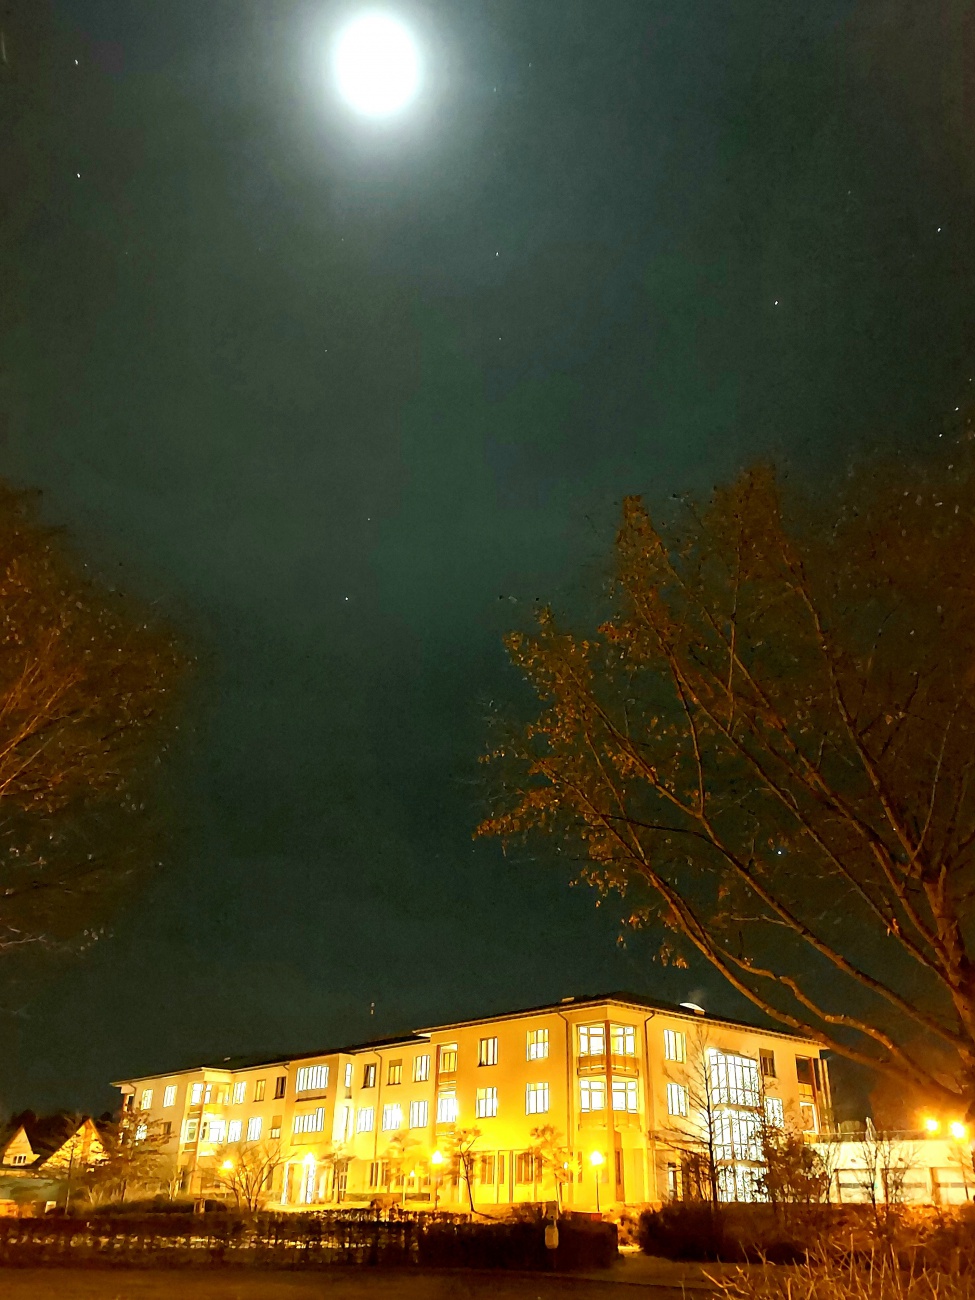 Foto: Martin Zehrer - Kemnather Krankenhaus bei Nacht.<br />
Am 12. Februar 2022 